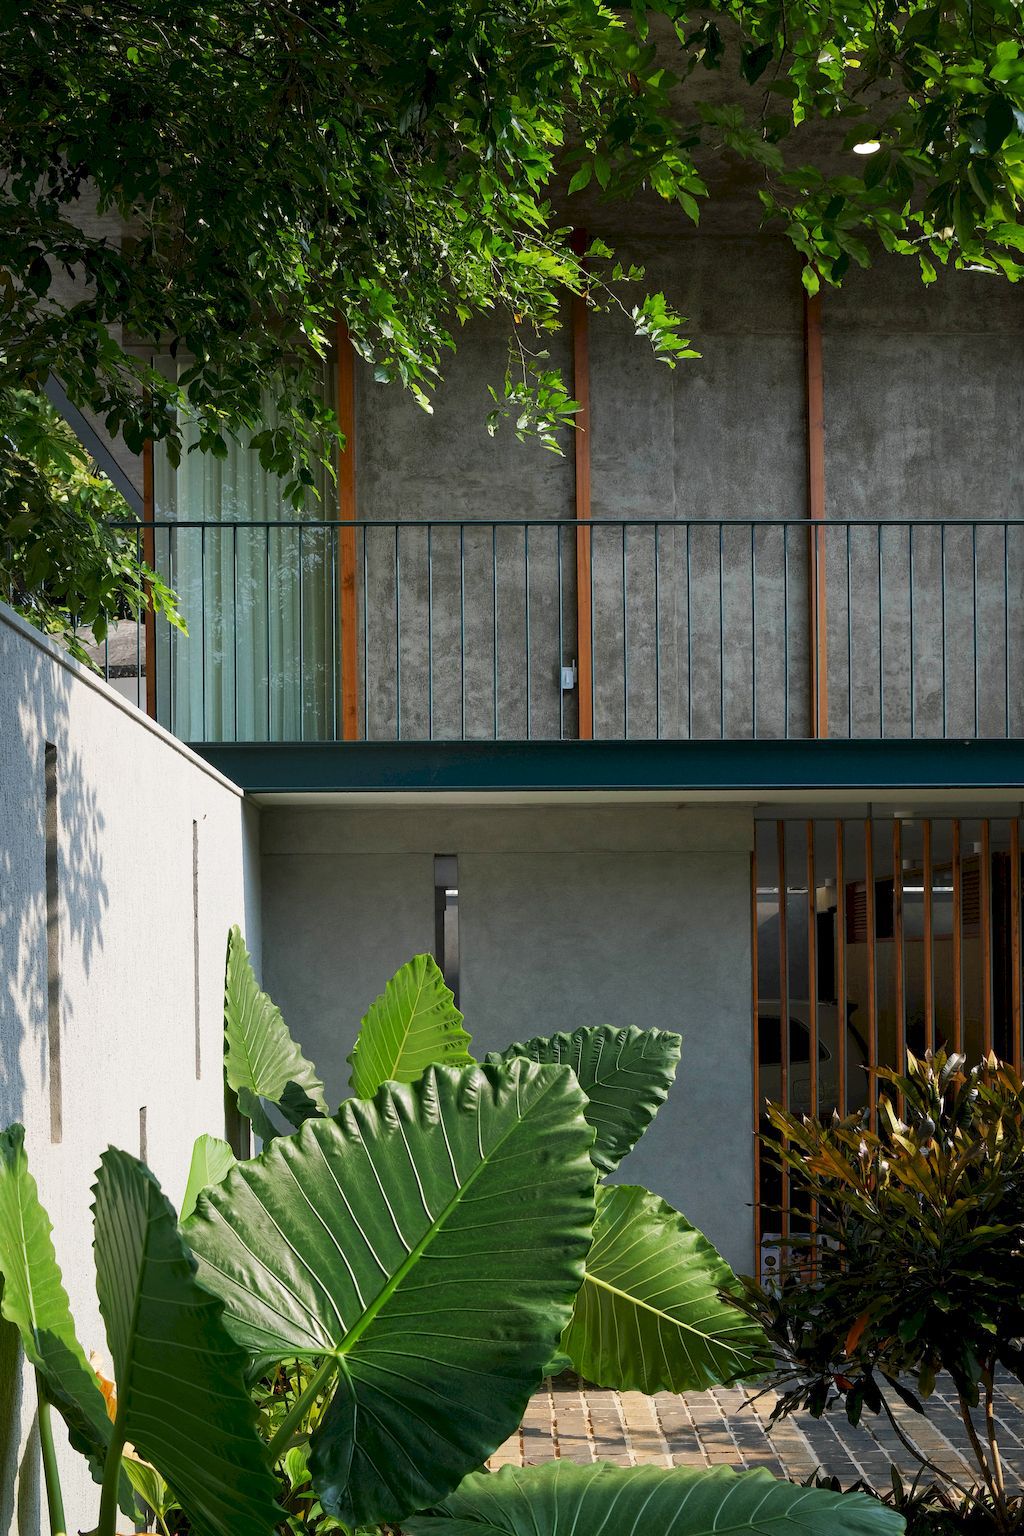 La Vie Residence, an Elegant House in India by SOHO Architects